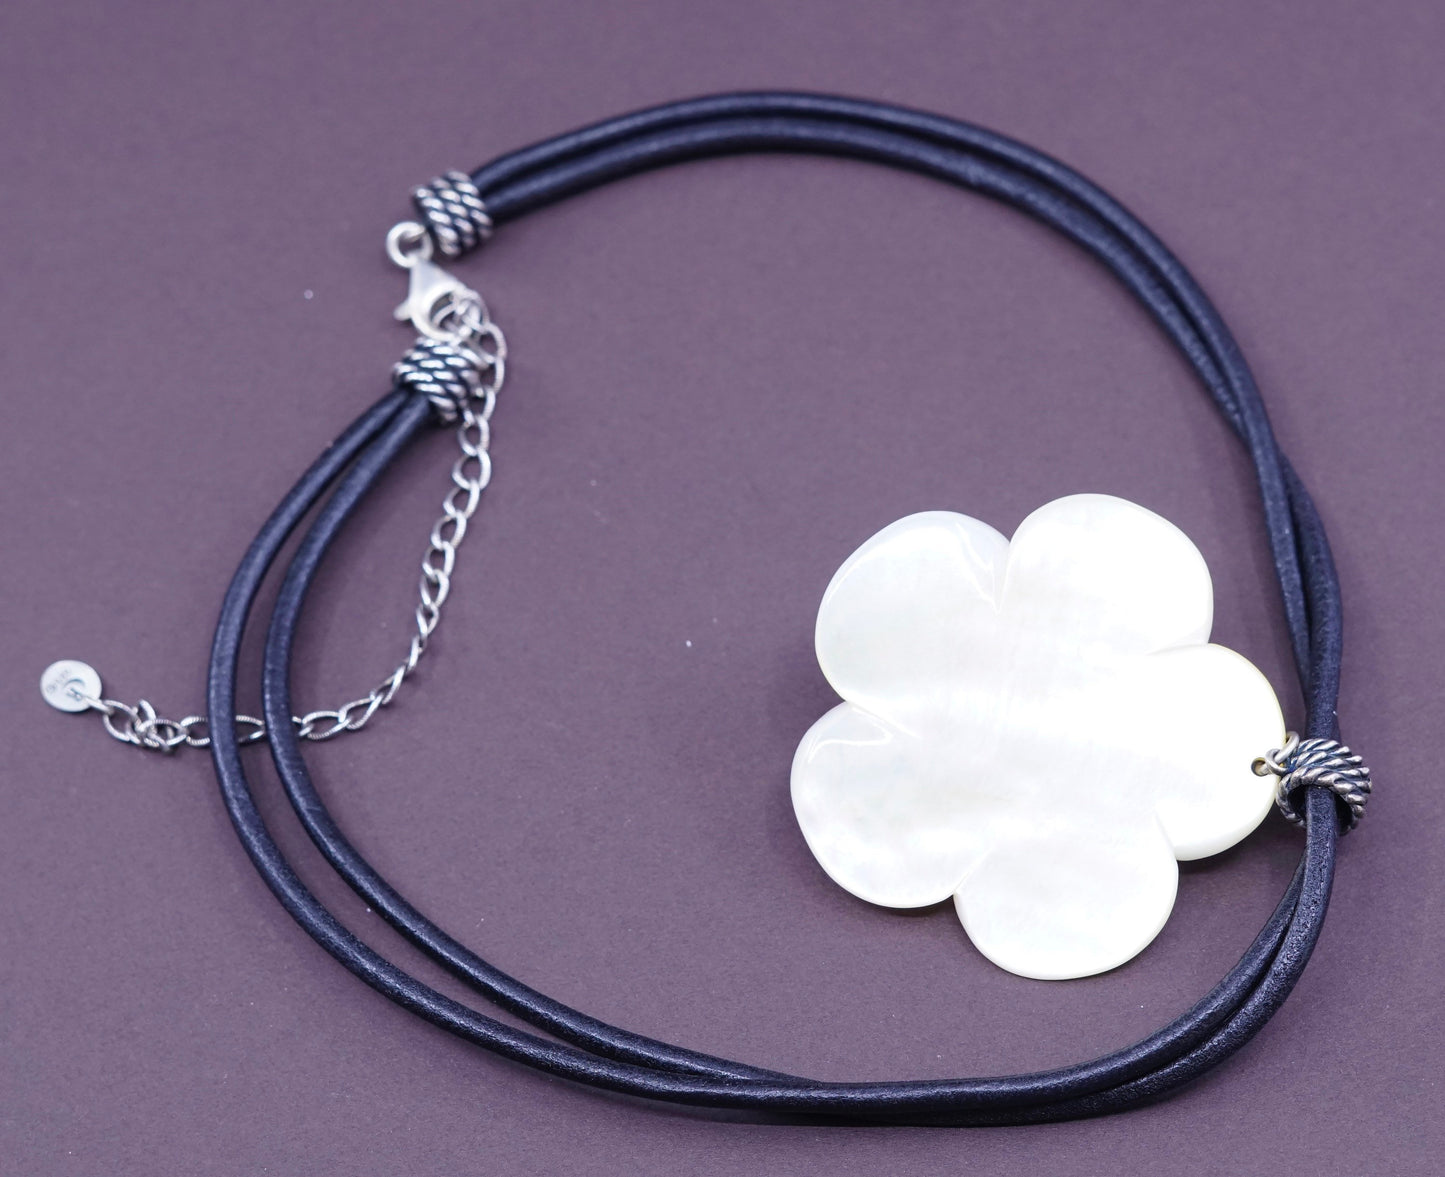 14+4”, multi strands leather necklace sterling 925 silver MOP flower pendants